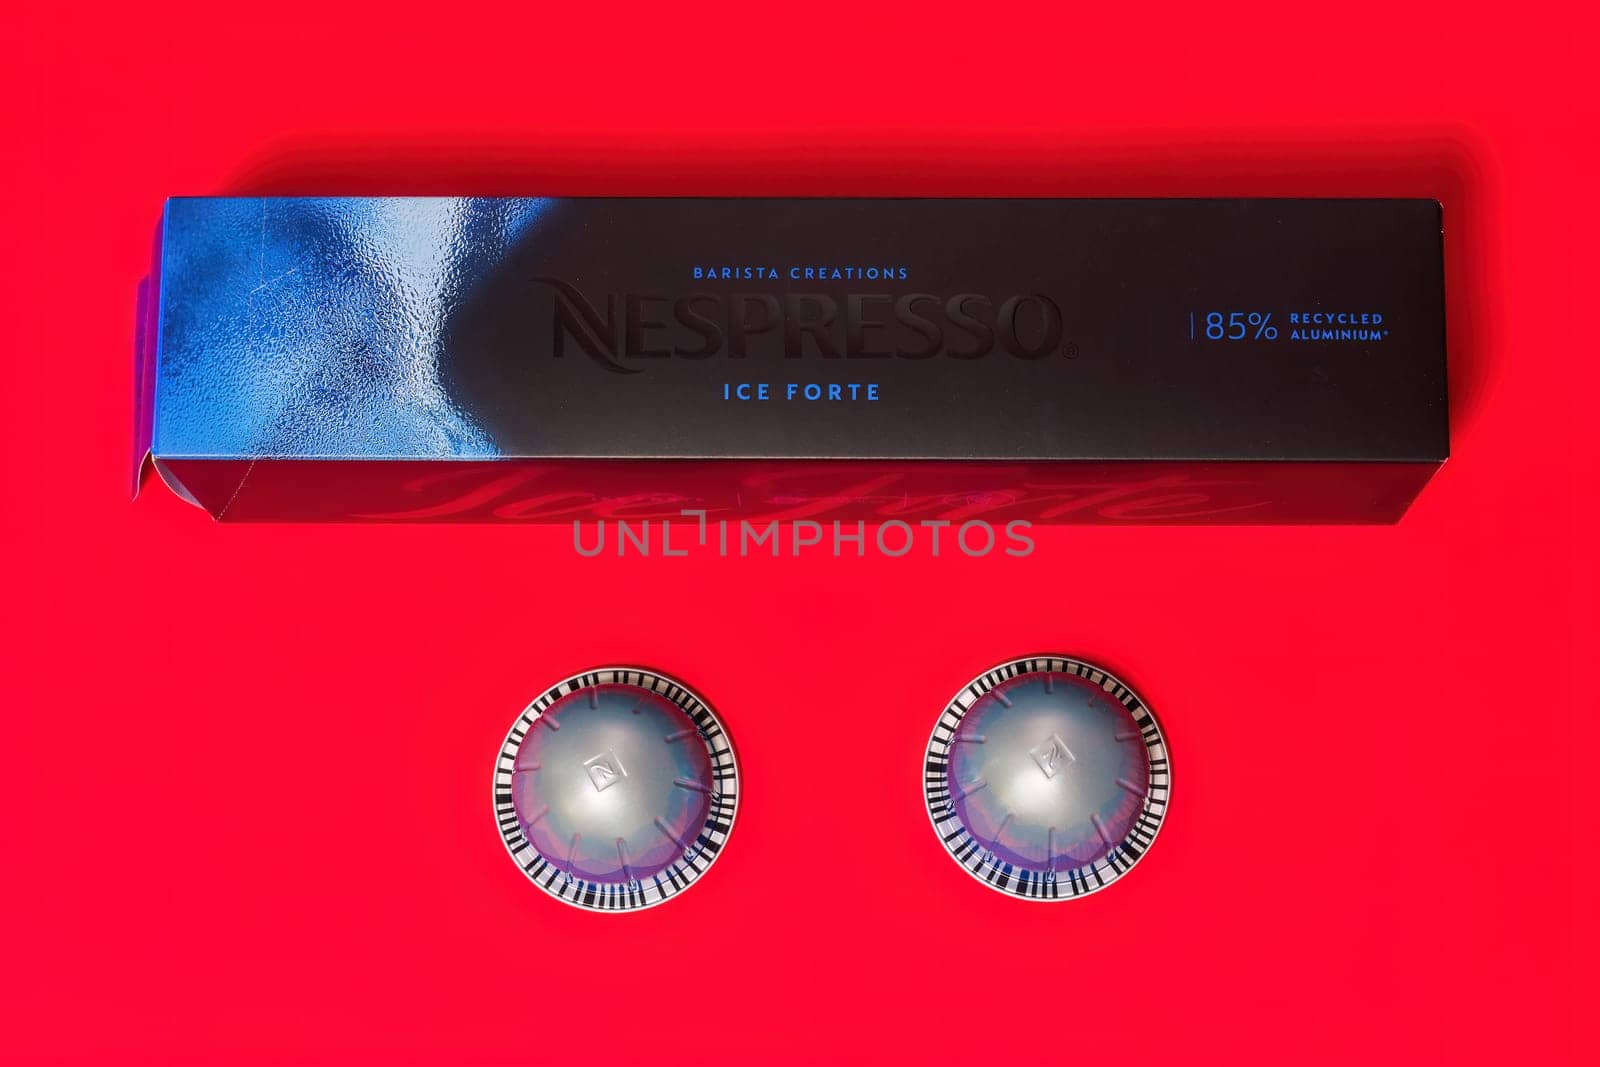 Nespresso Vertuo Pop machine Barista Creations Ice Forte aluminium pods with box and logo, used to create espresso-dripping coffee.